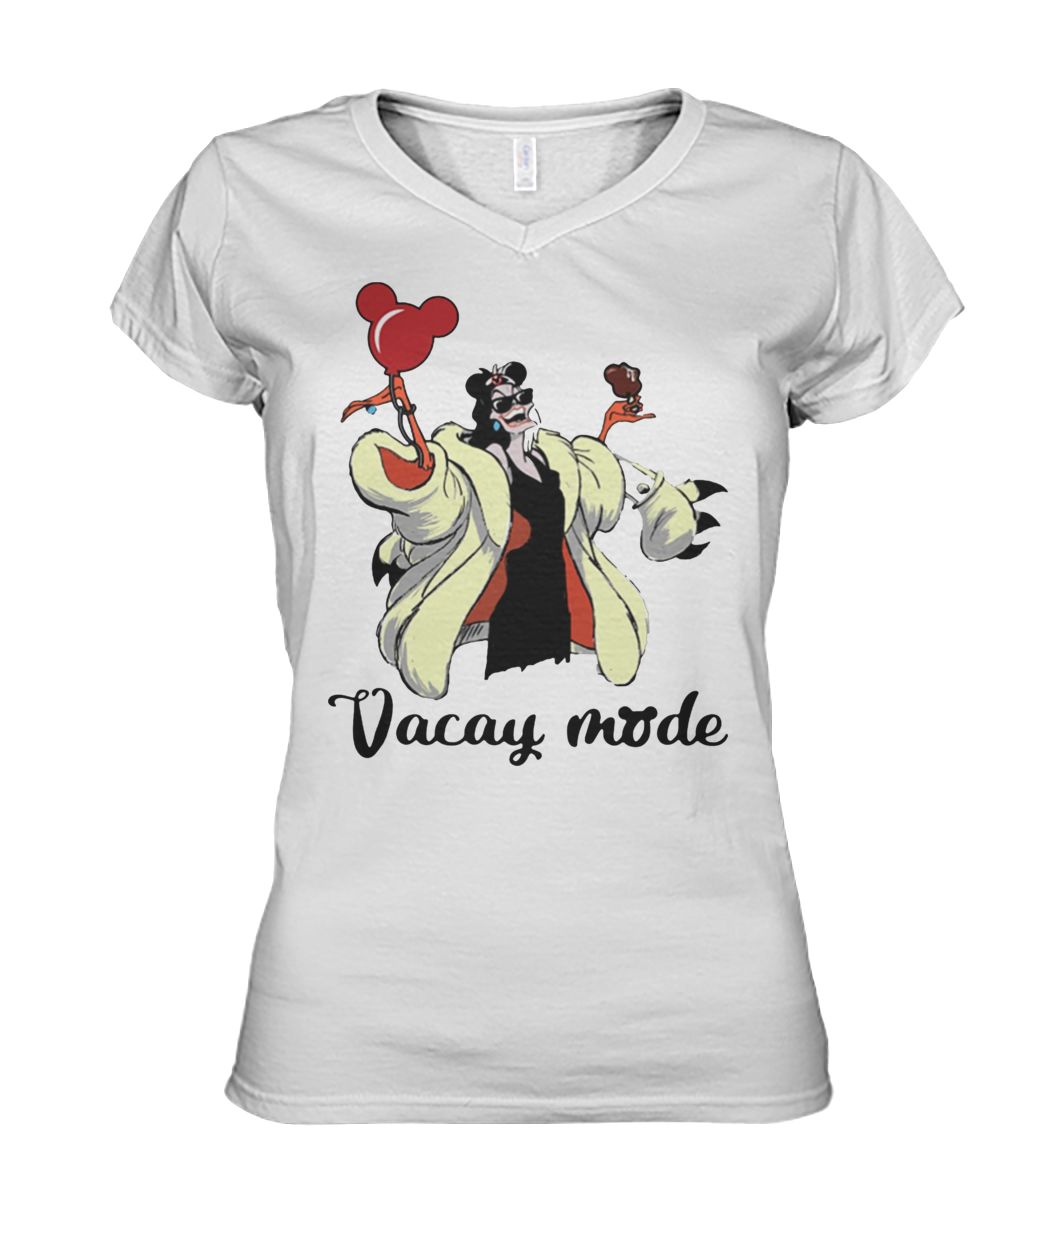 Cruella de Vil vacay mode balloon mickey mouse women's v-neck